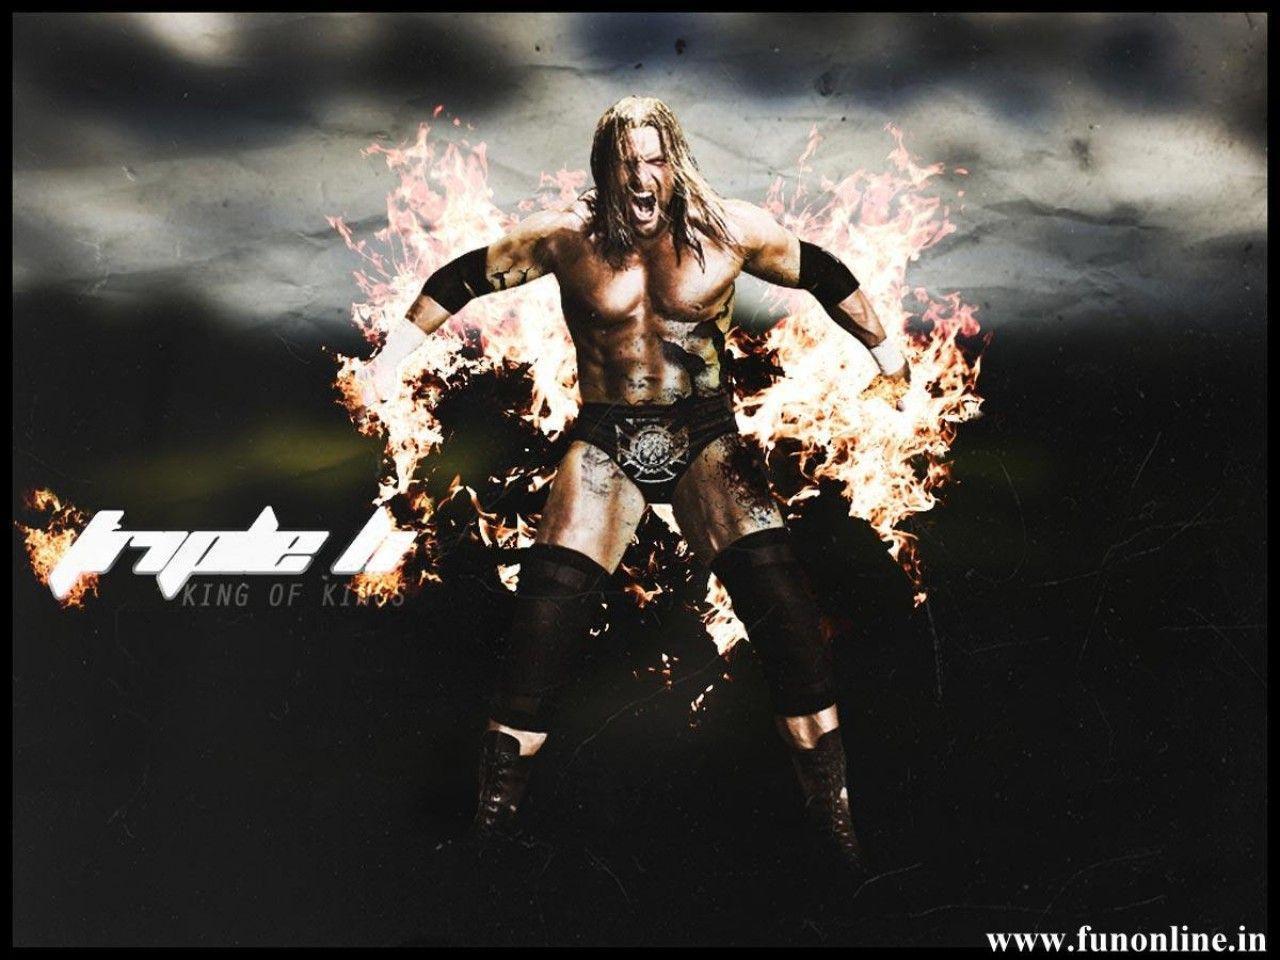 Triple H Wallpapers, Download WWE Champion Triple H HD Wallpapers Free